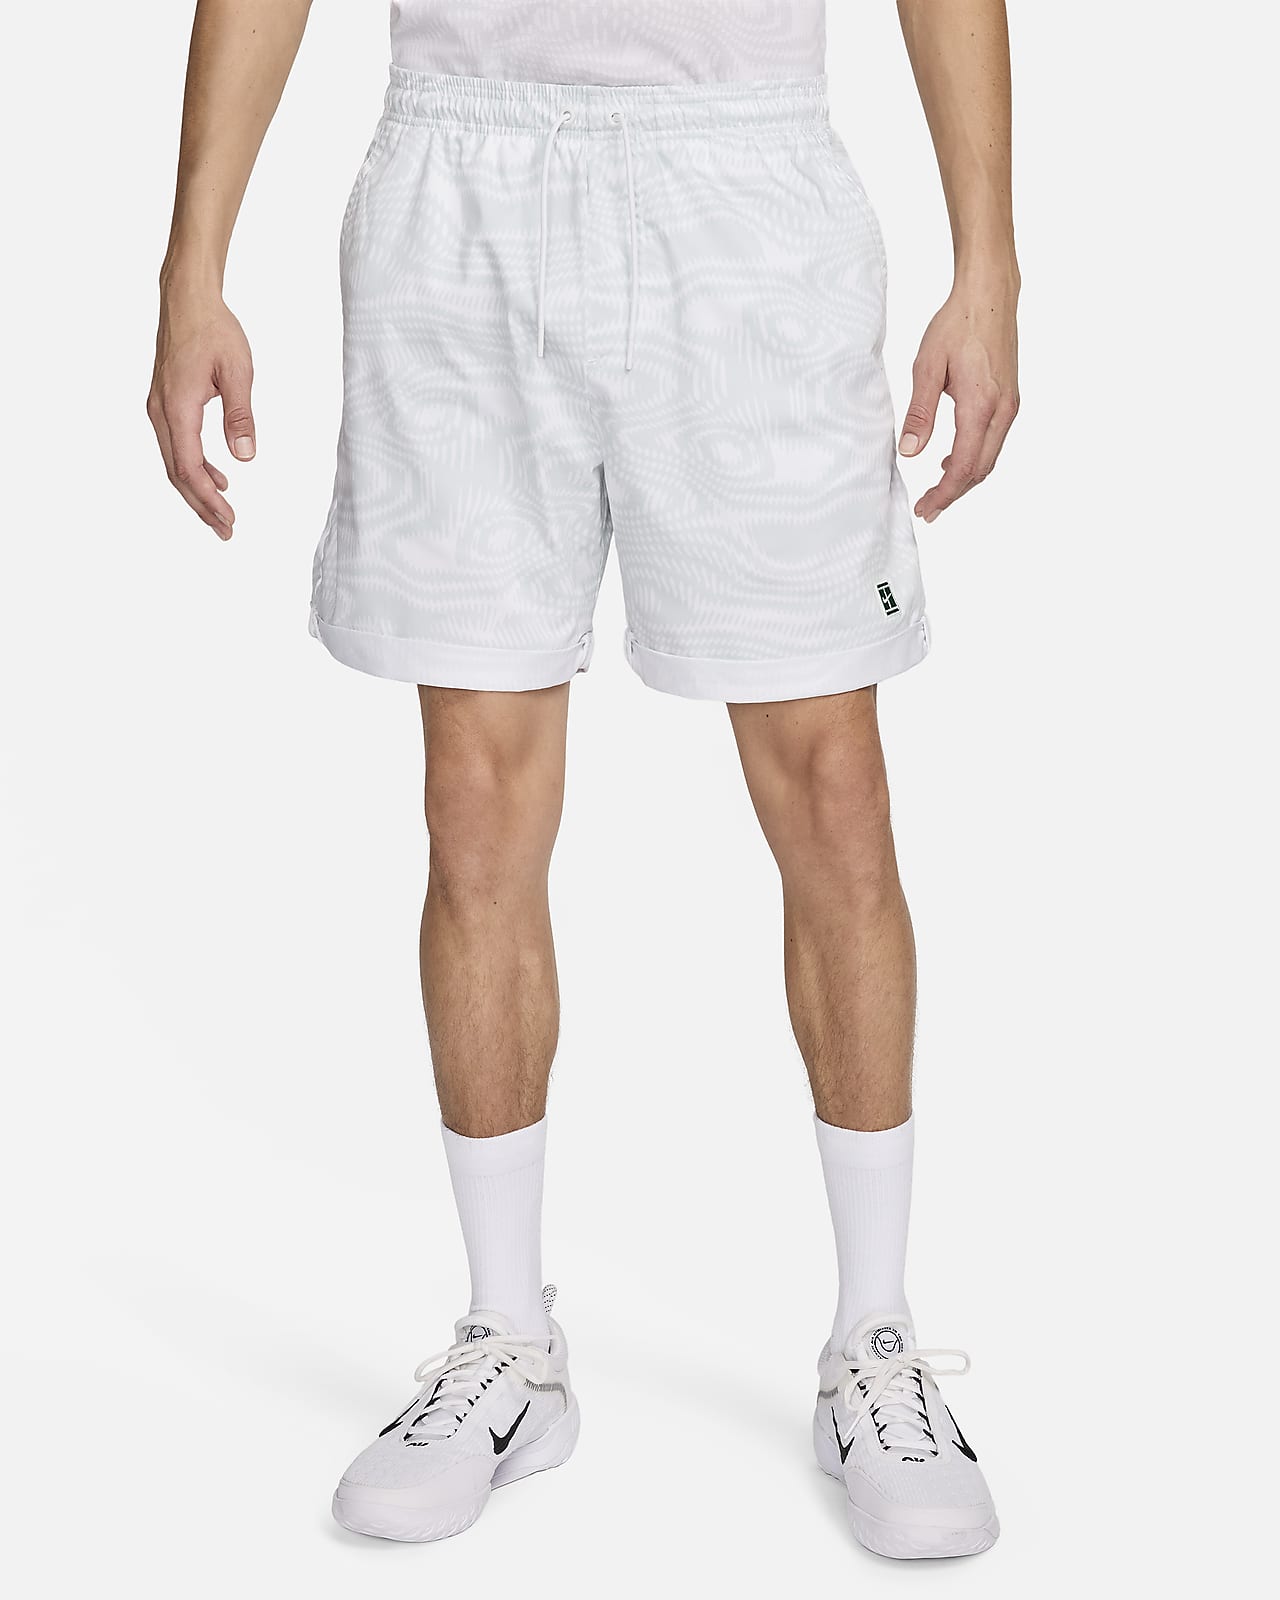 NikeCourt Heritage Men's 6" Dri-FIT Tennis Shorts